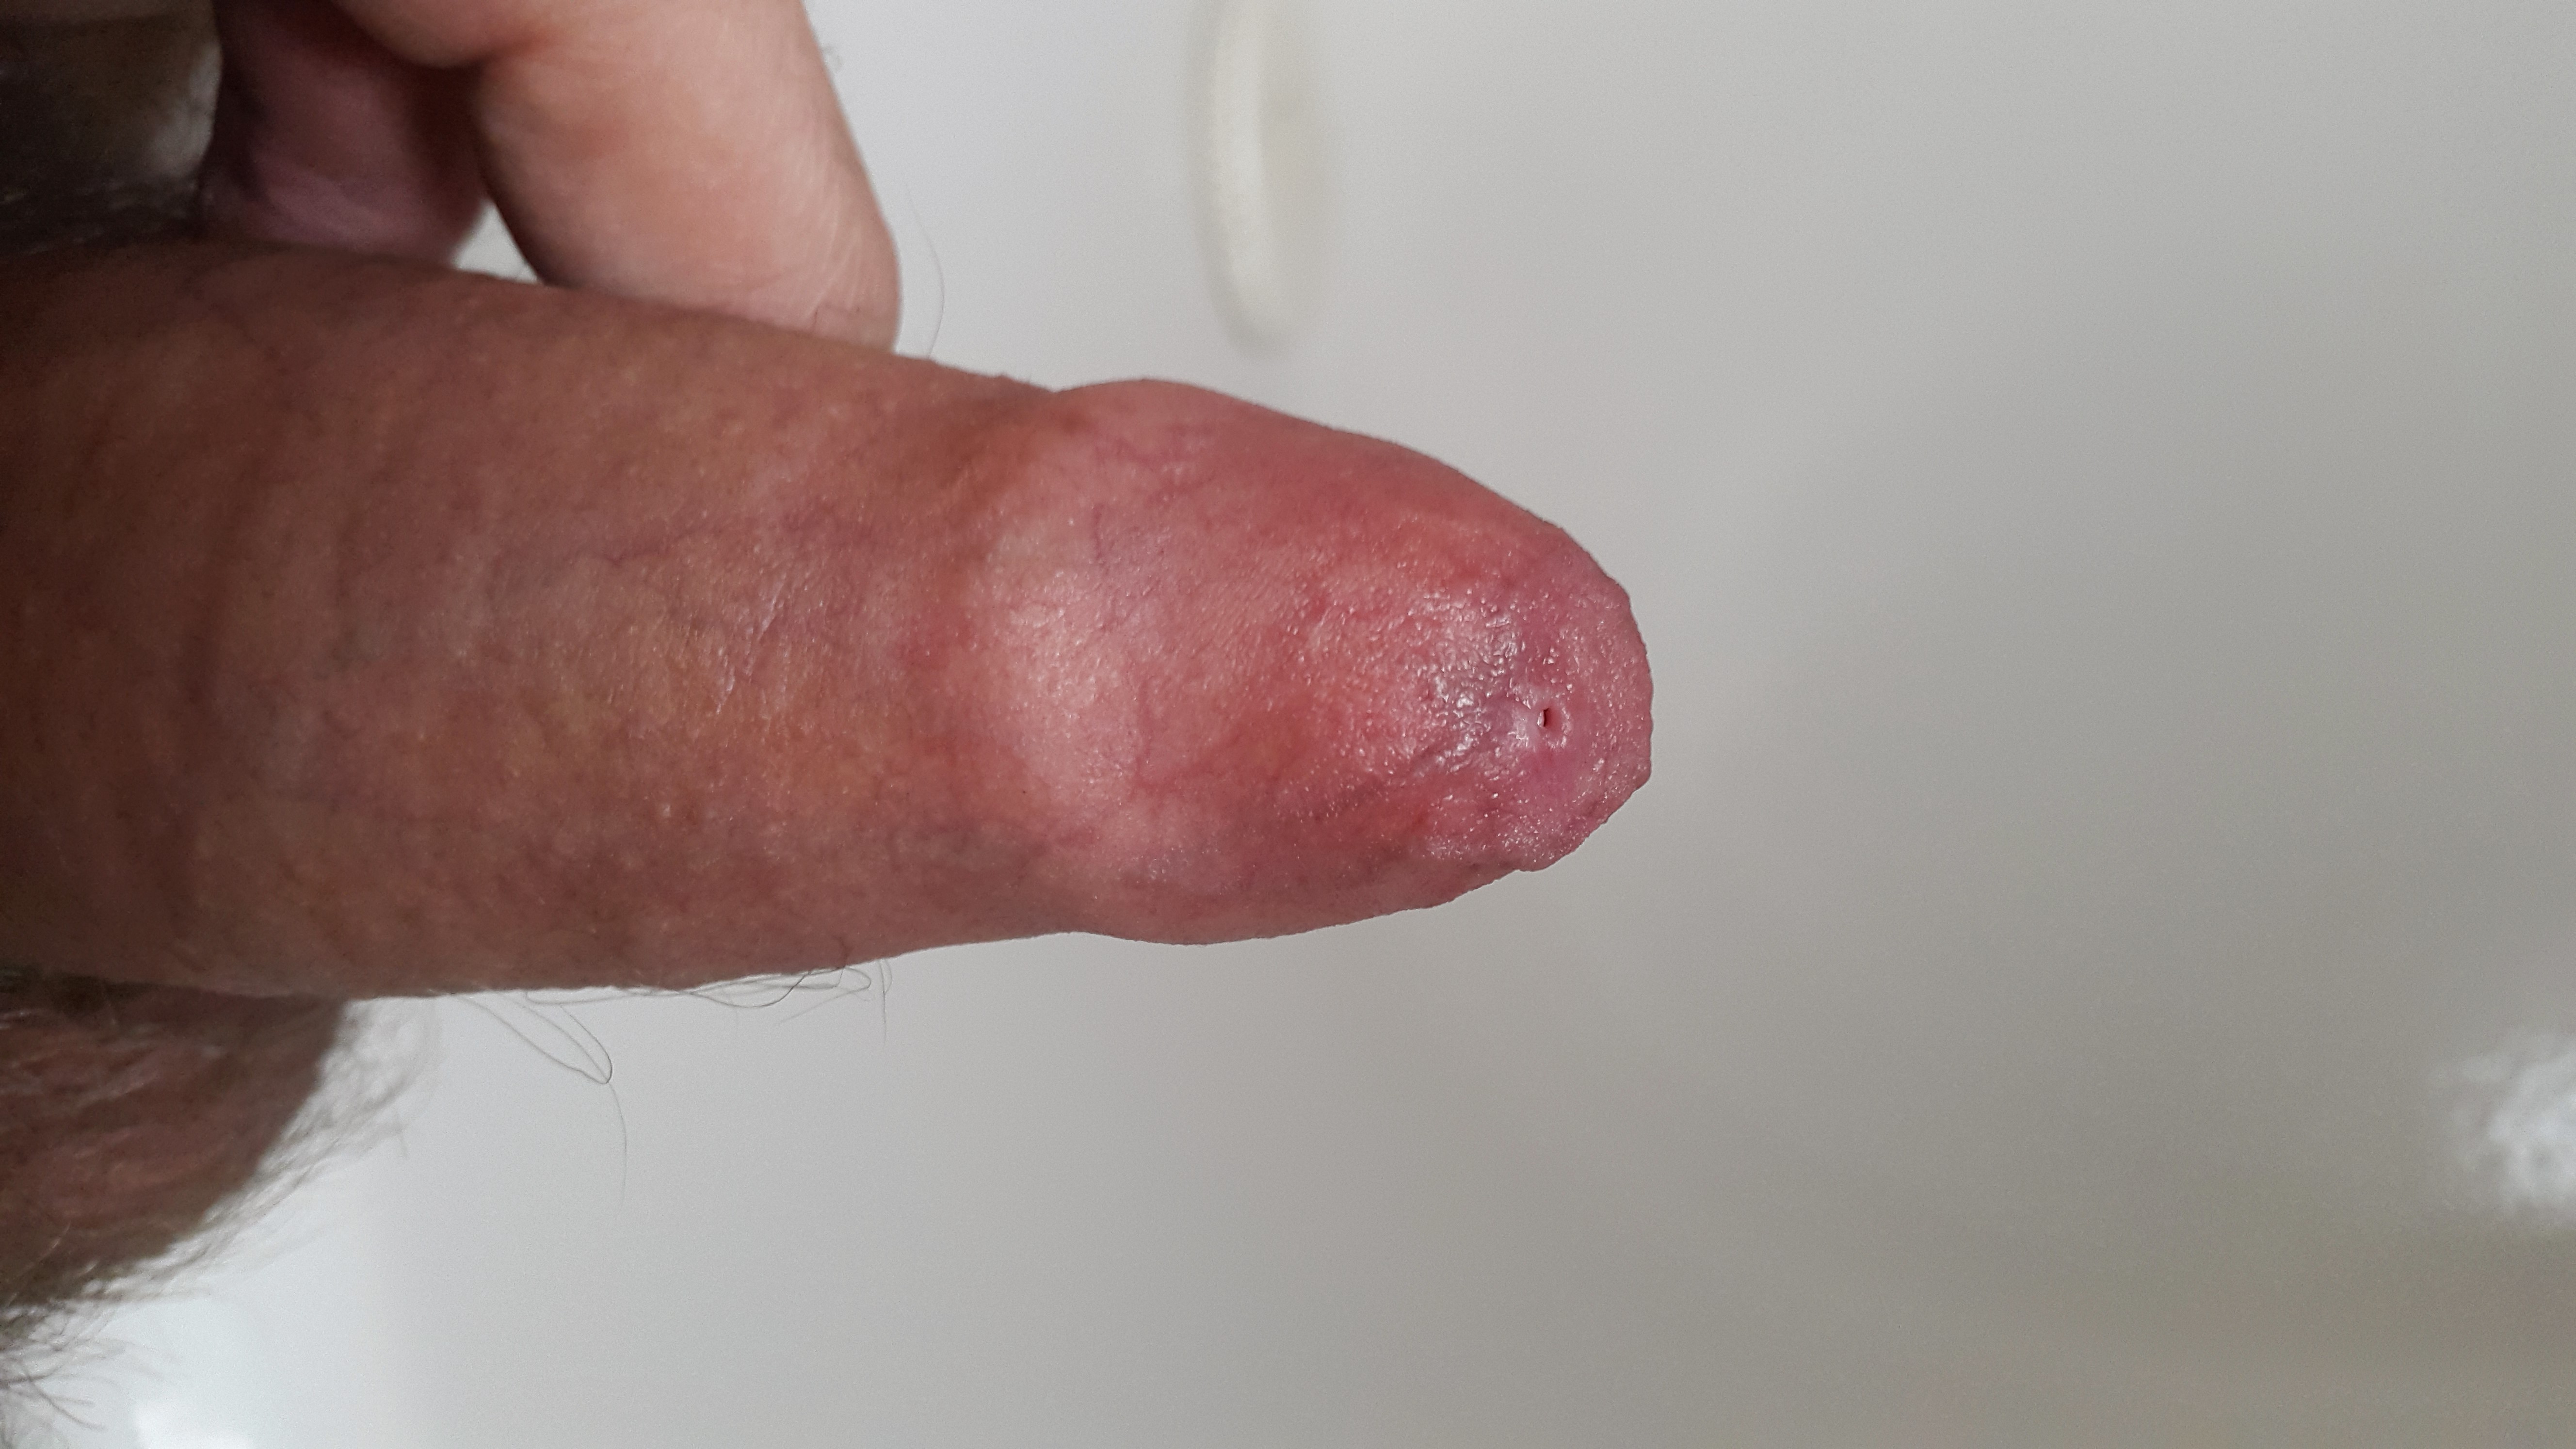 Erect penis with pinhole phimosis